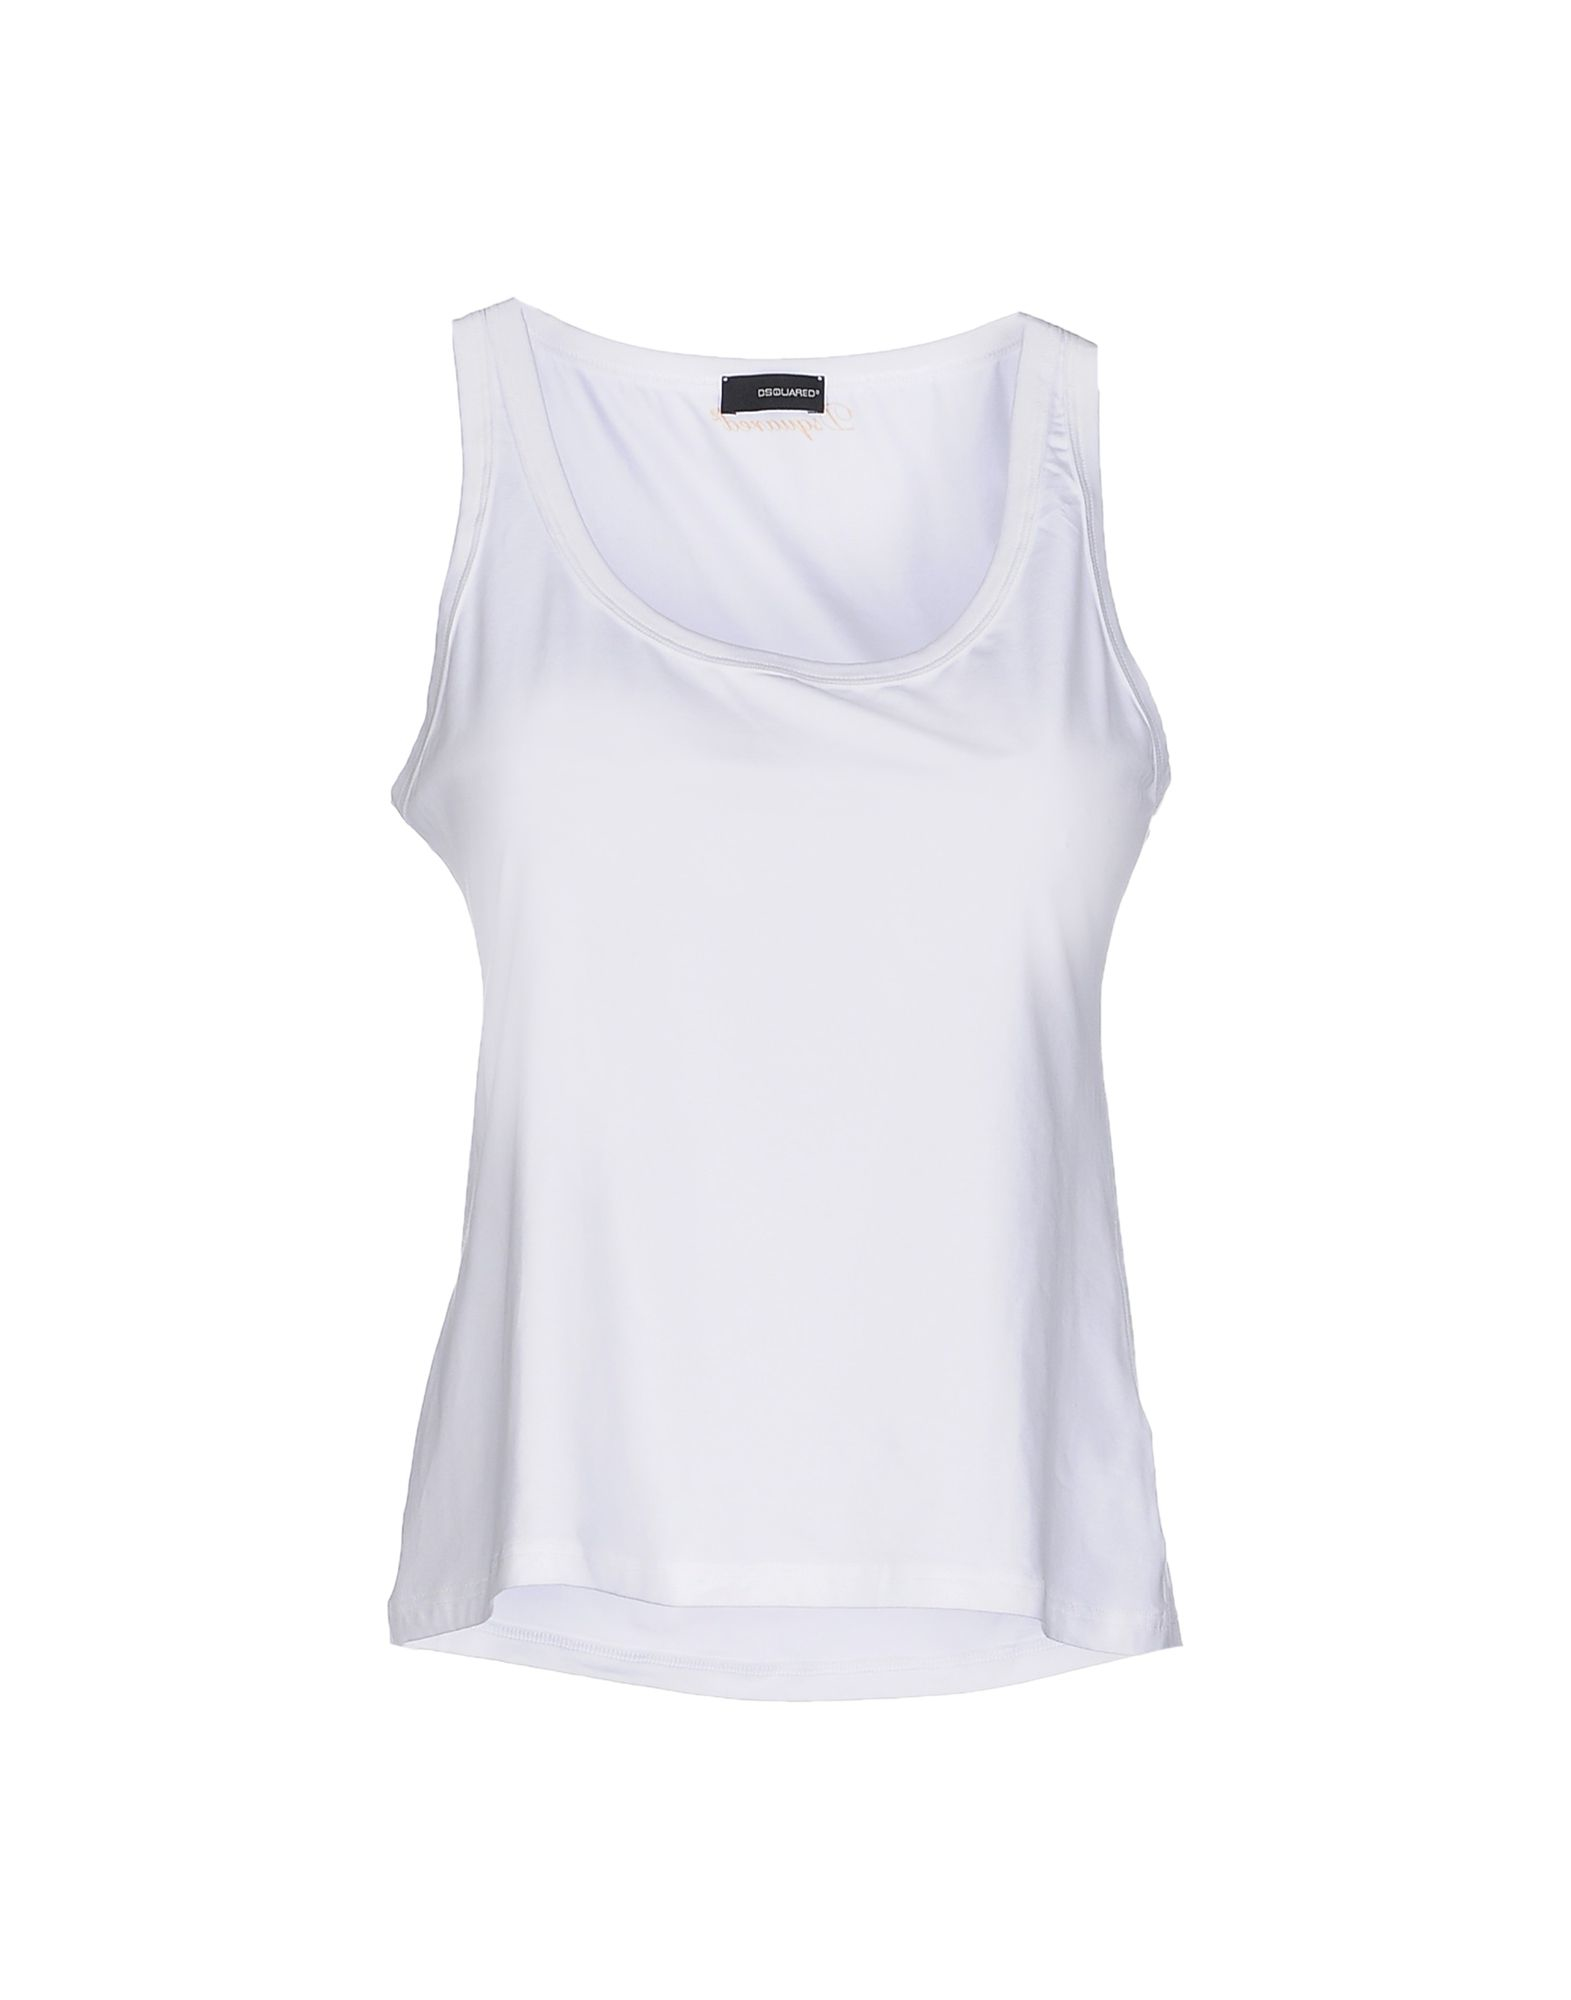 Lyst - Dsquared² Sleeveless Undershirt in White